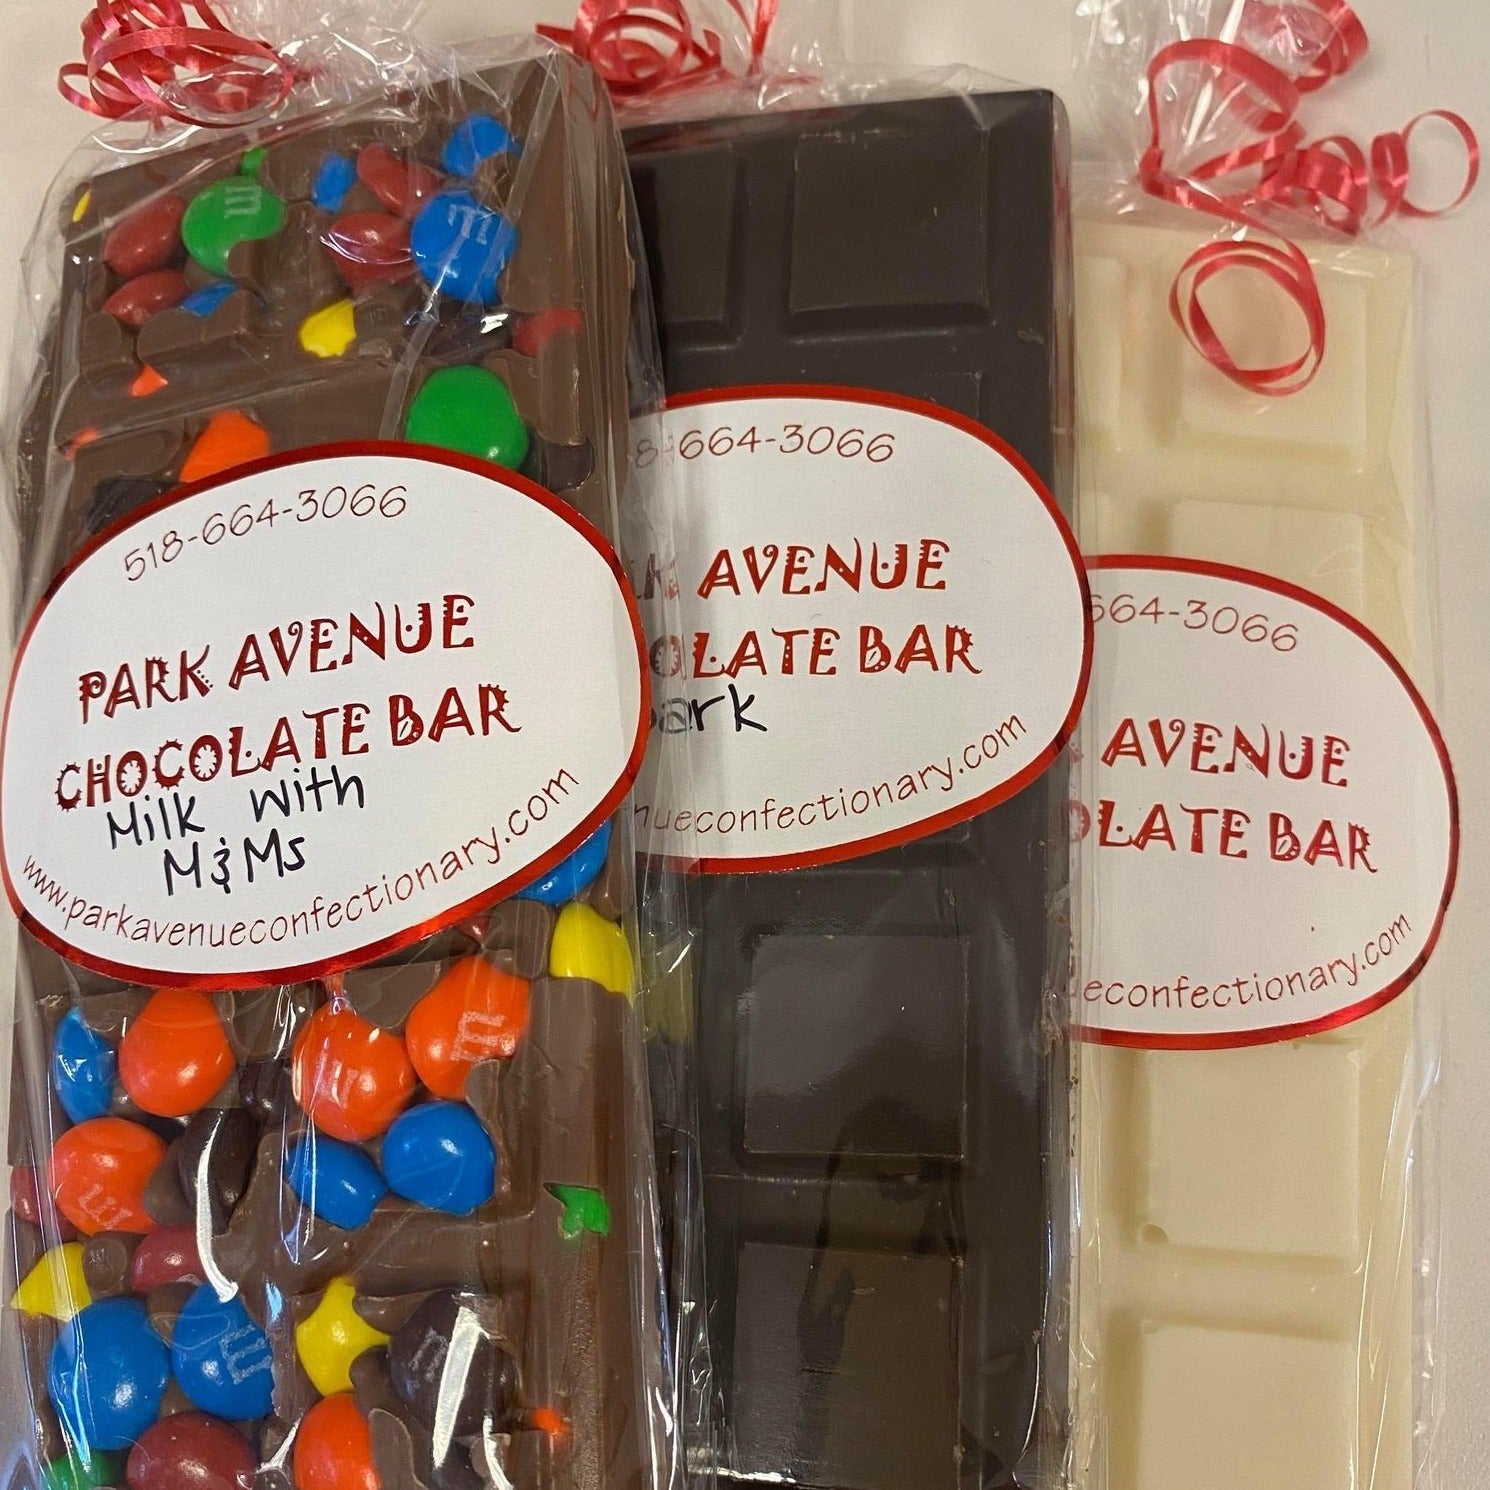 Park Avenue Chocolate Bar